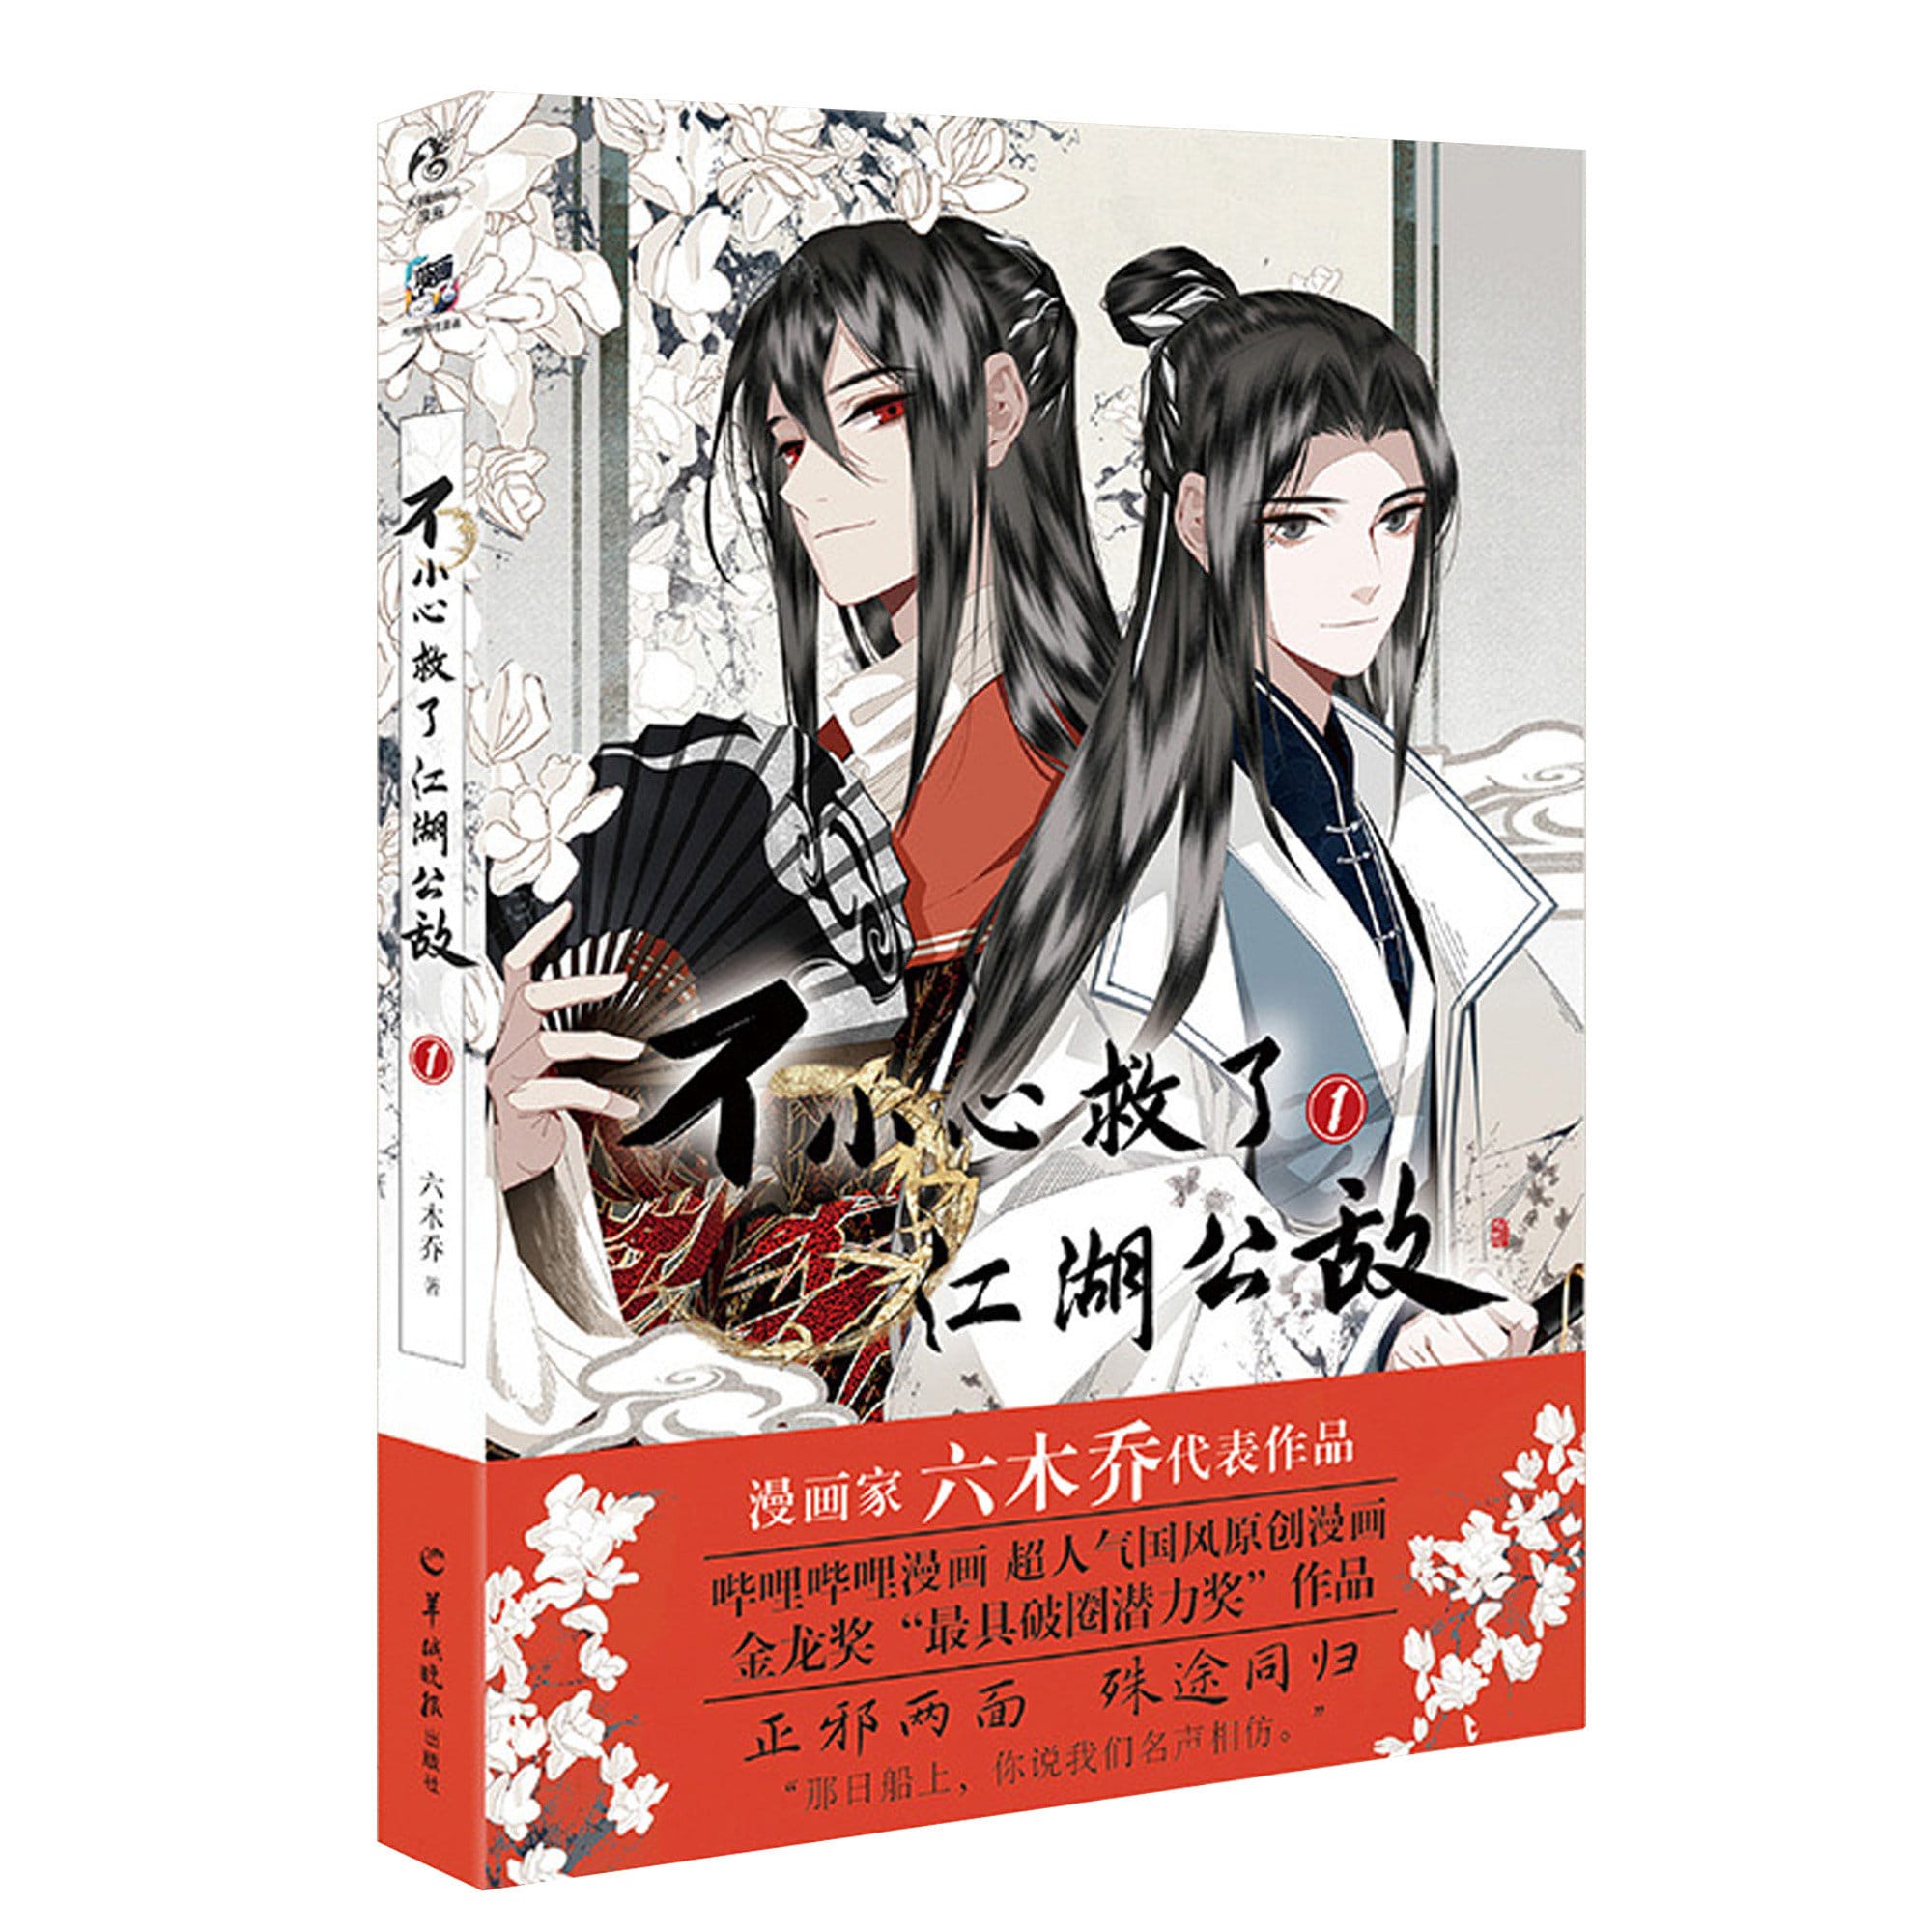 Grandmaster of Demonic Cultivation: Mo Dao Zu Shi Novel Vol 4 Comic Book  English Manga Novel Books Mdzs - AliExpress